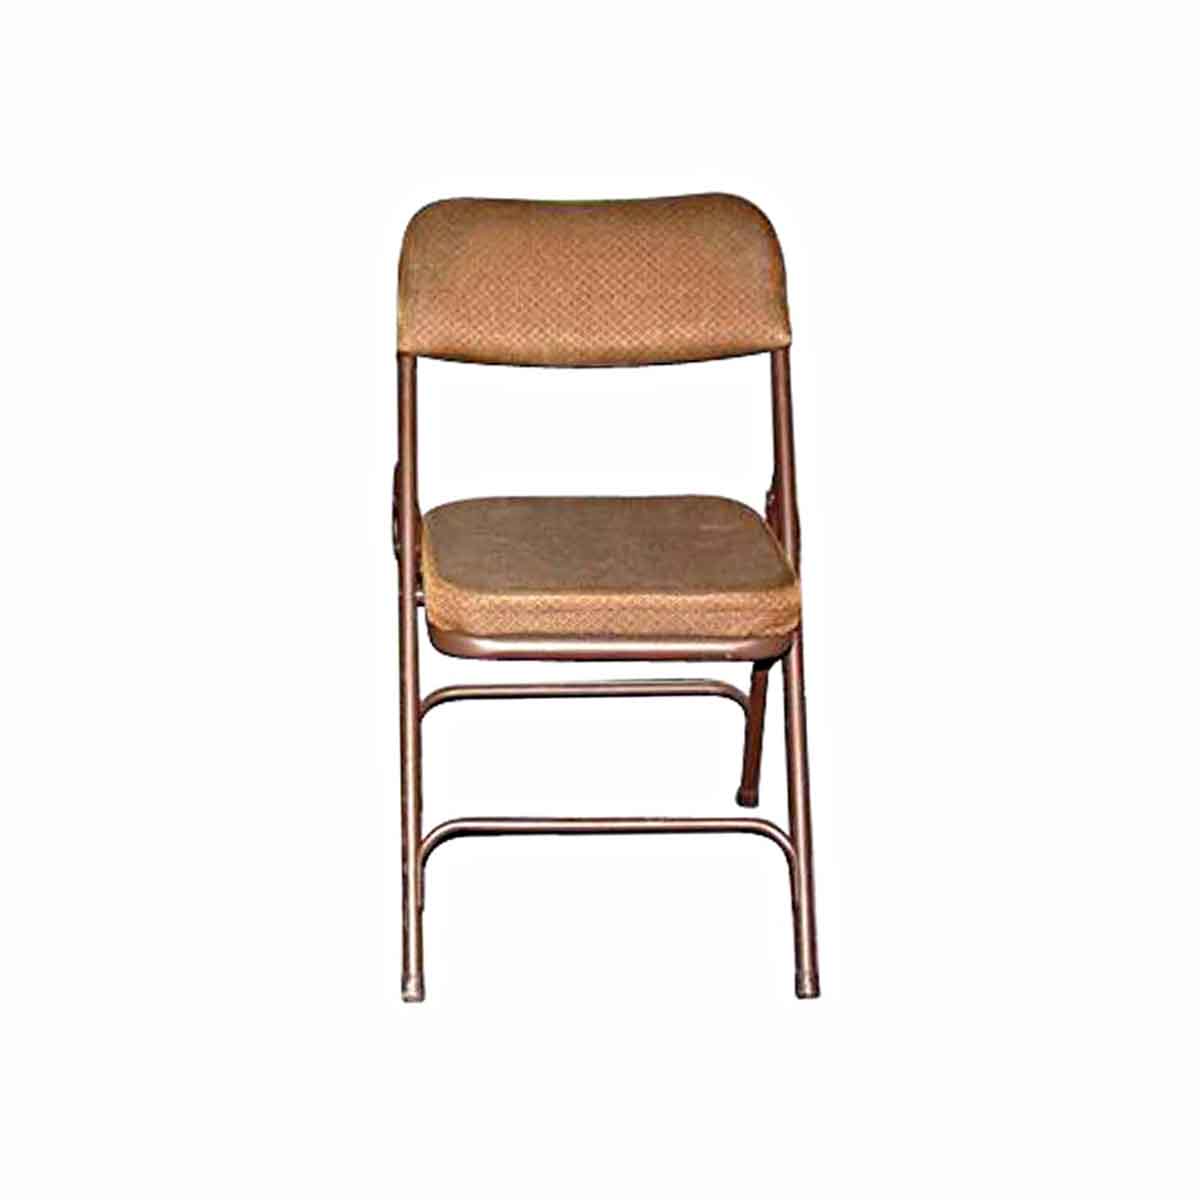 Flea Market Metal Folding Chair With Cushion Seat K191226 